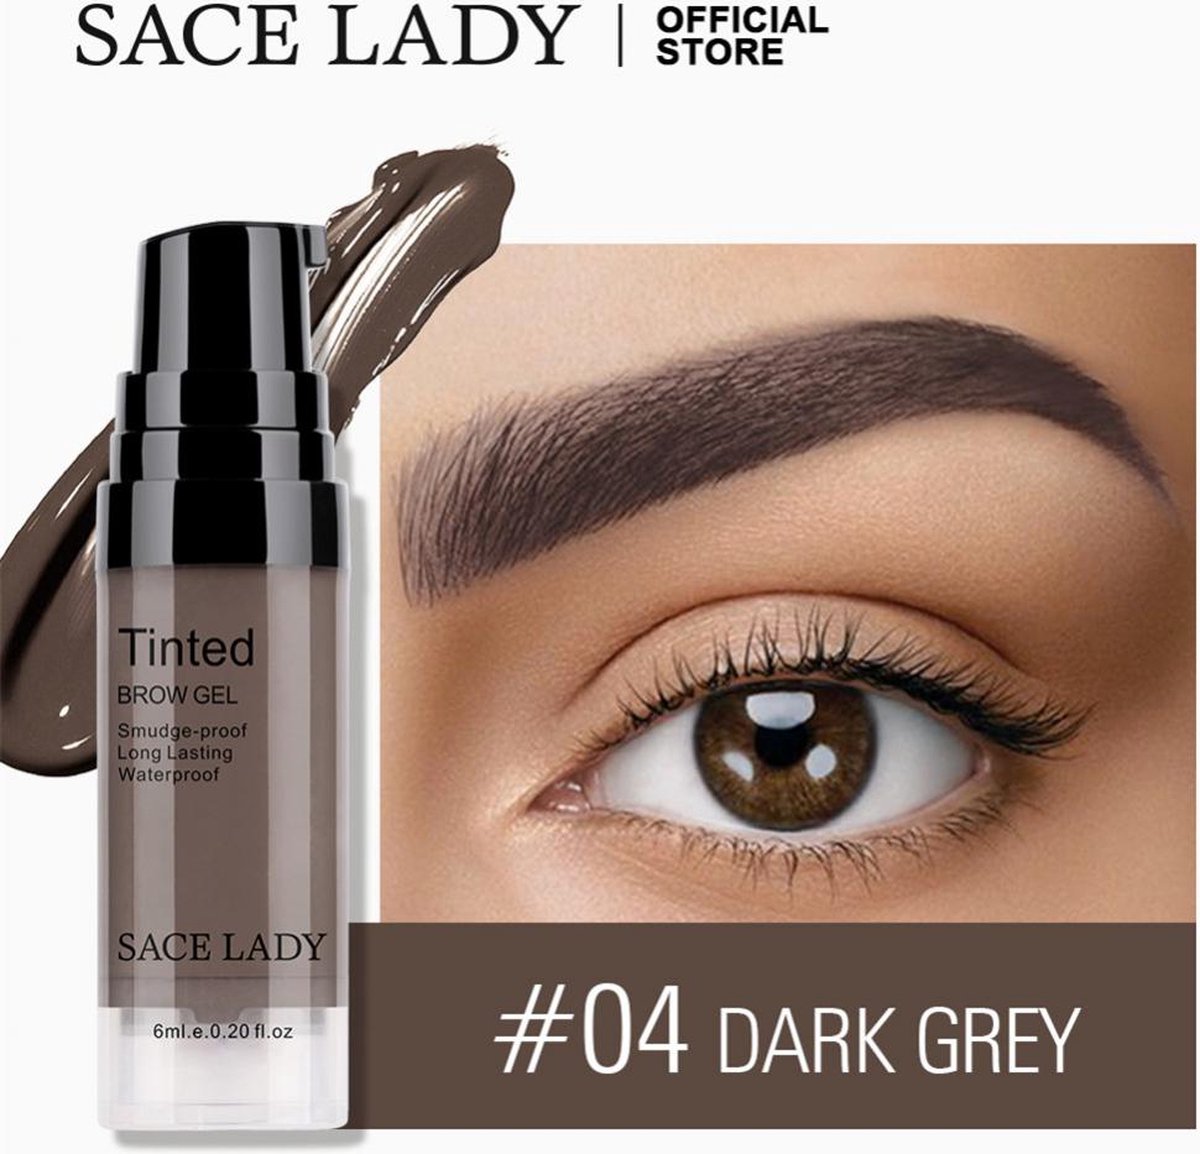 Sace Lady Tattoo Brow Gel - Brow Gel - Wenkbrauw Gel Mascara – Dark Grey #04 – Assortiment ‘Het Gemak’